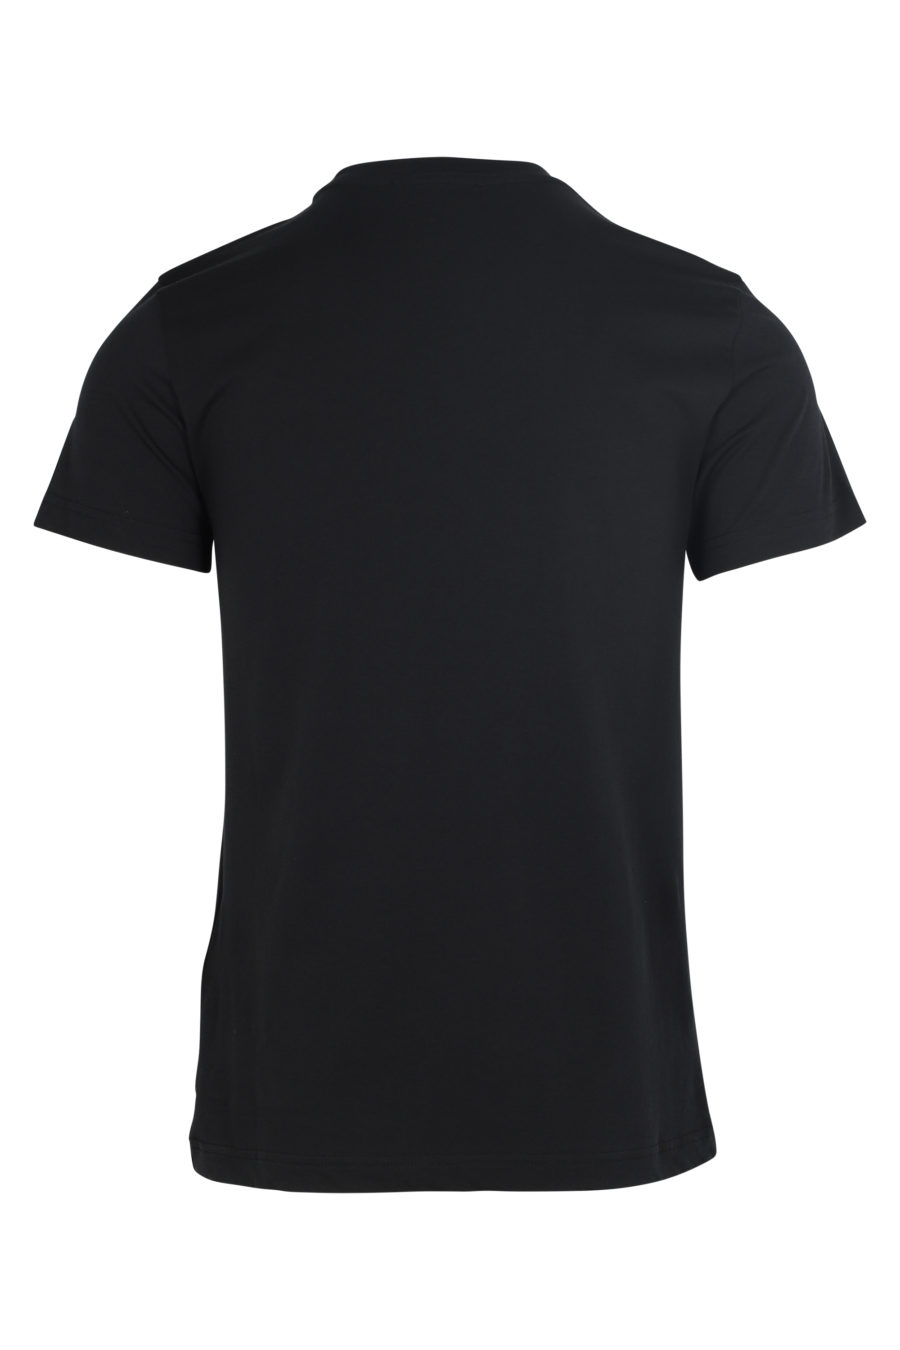 Schwarzes T-Shirt mit rundem Metallic-Logo - IMG 6058